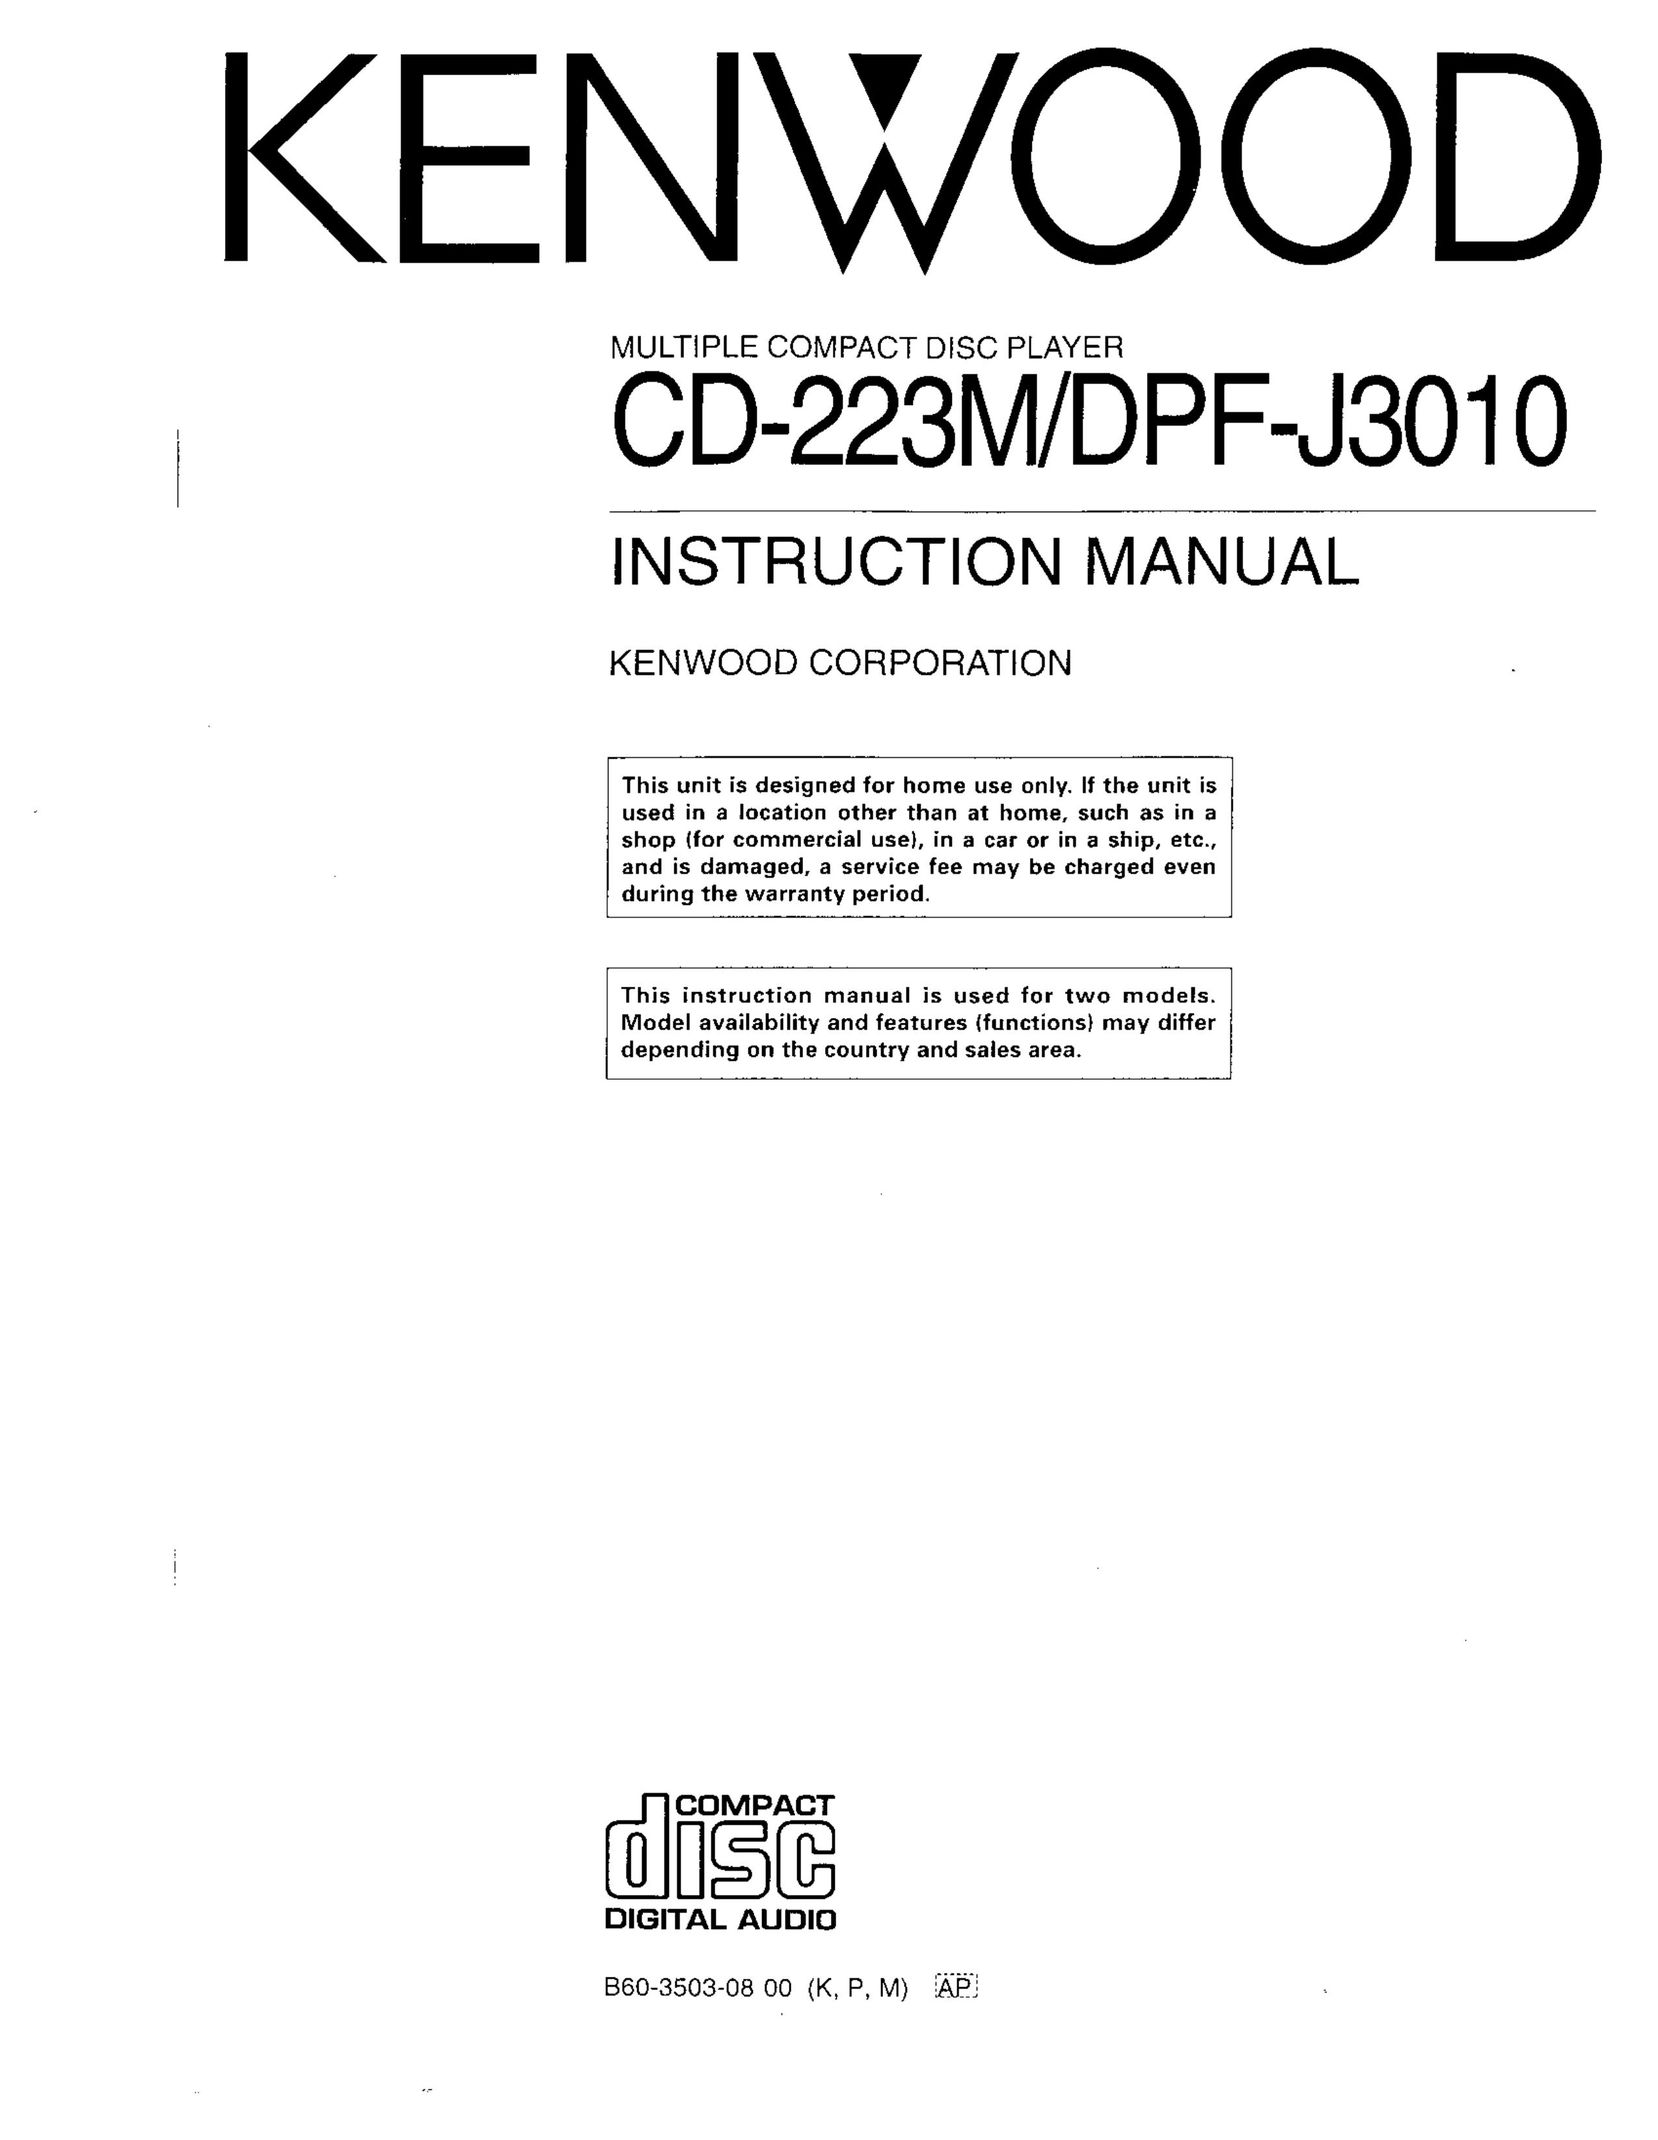 Kenwood CD-223M CD Player User Manual